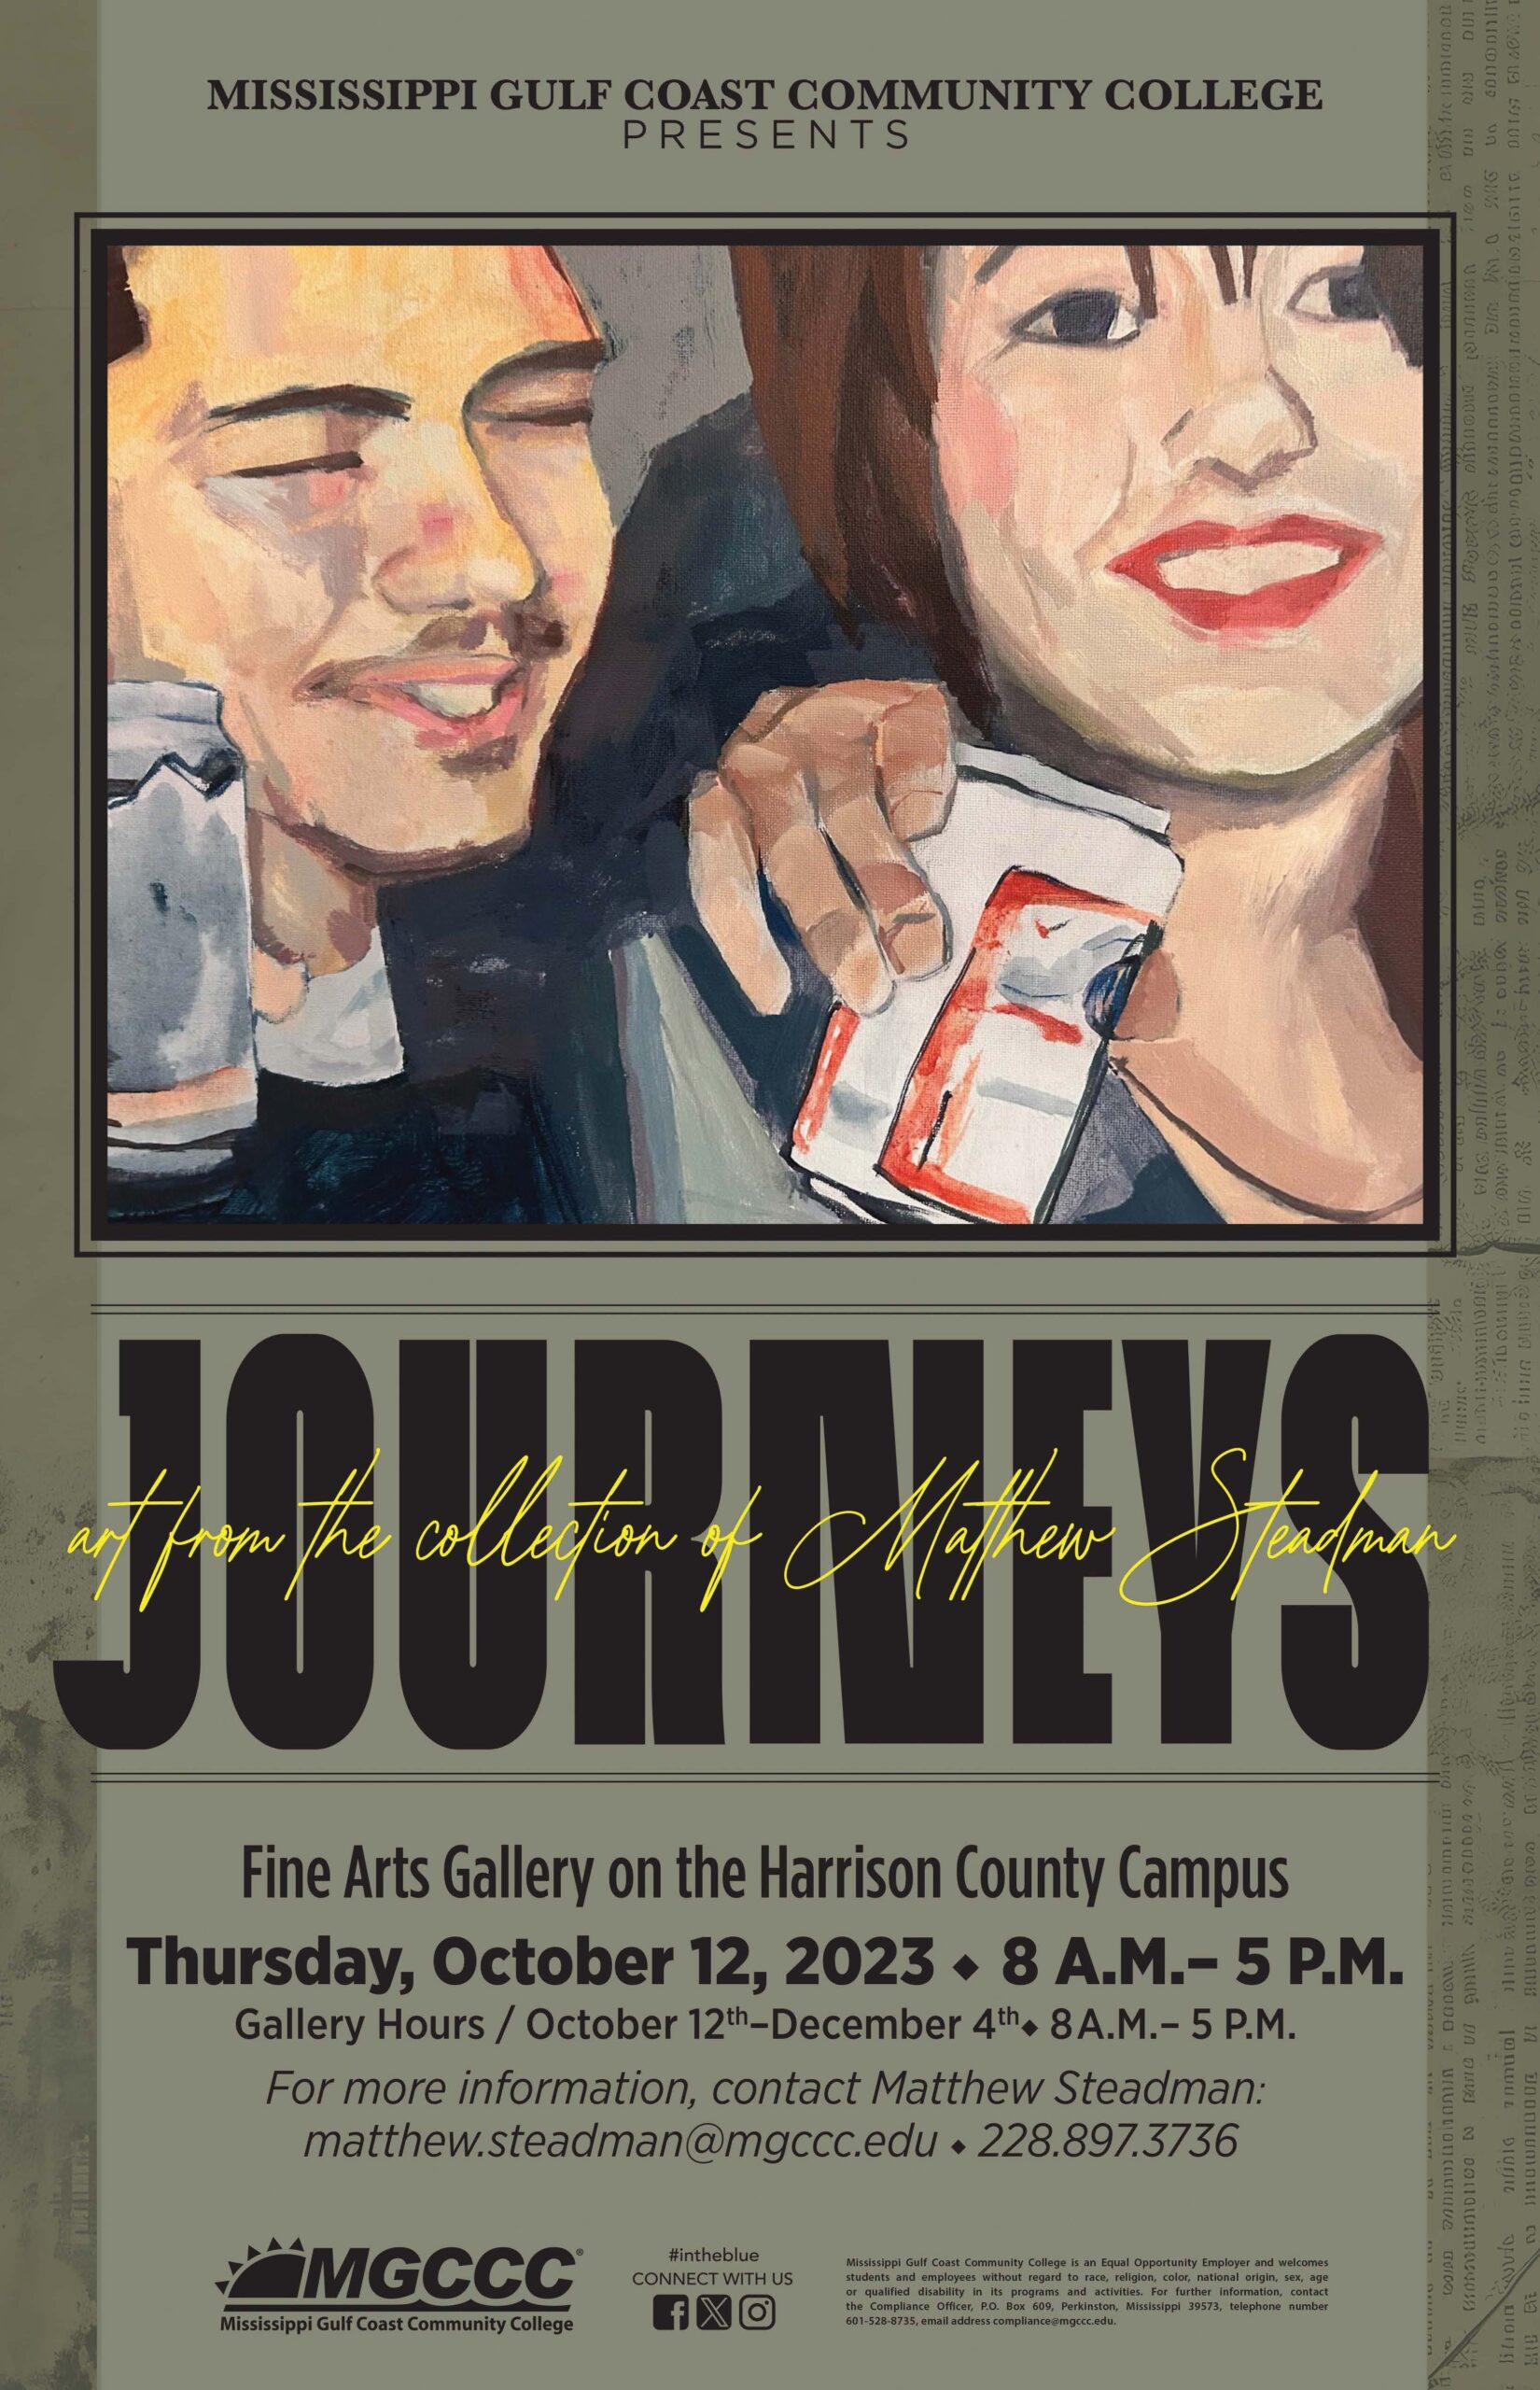 MGCCC Harrison County Campus to host “Journeys” art exhibit